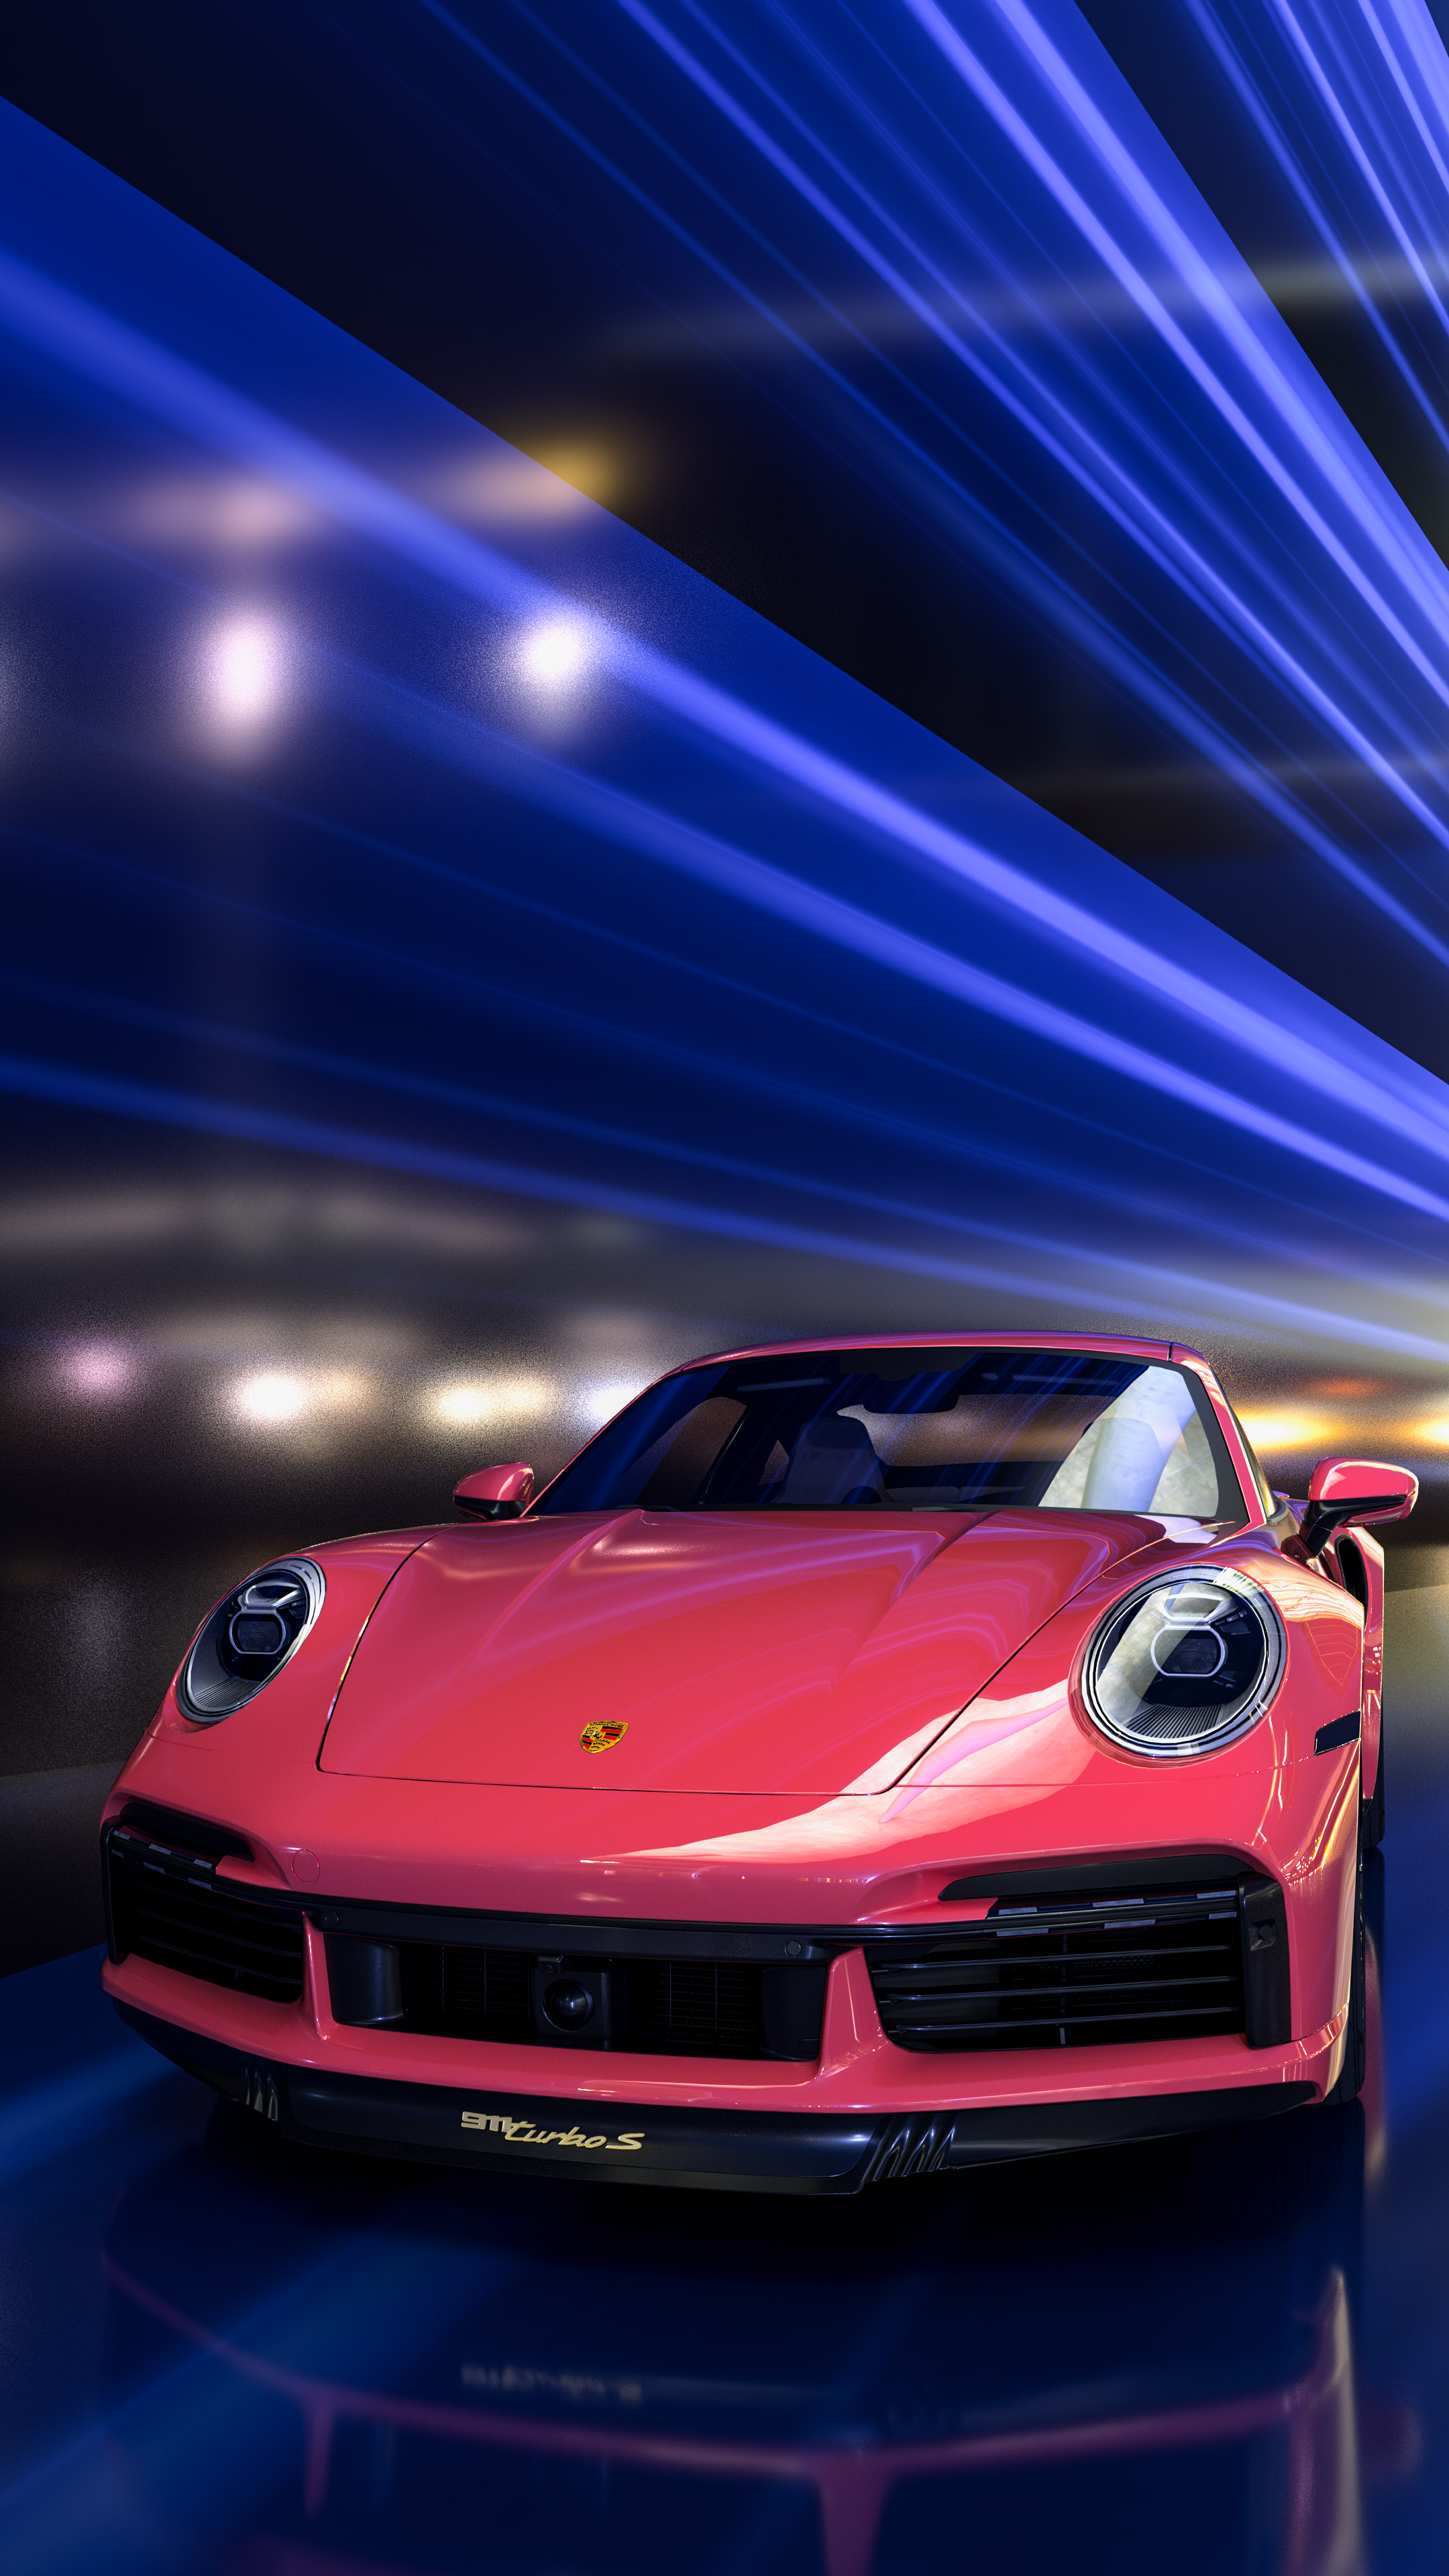 iphone wallpaper in 4K of Porsche 911 sports car